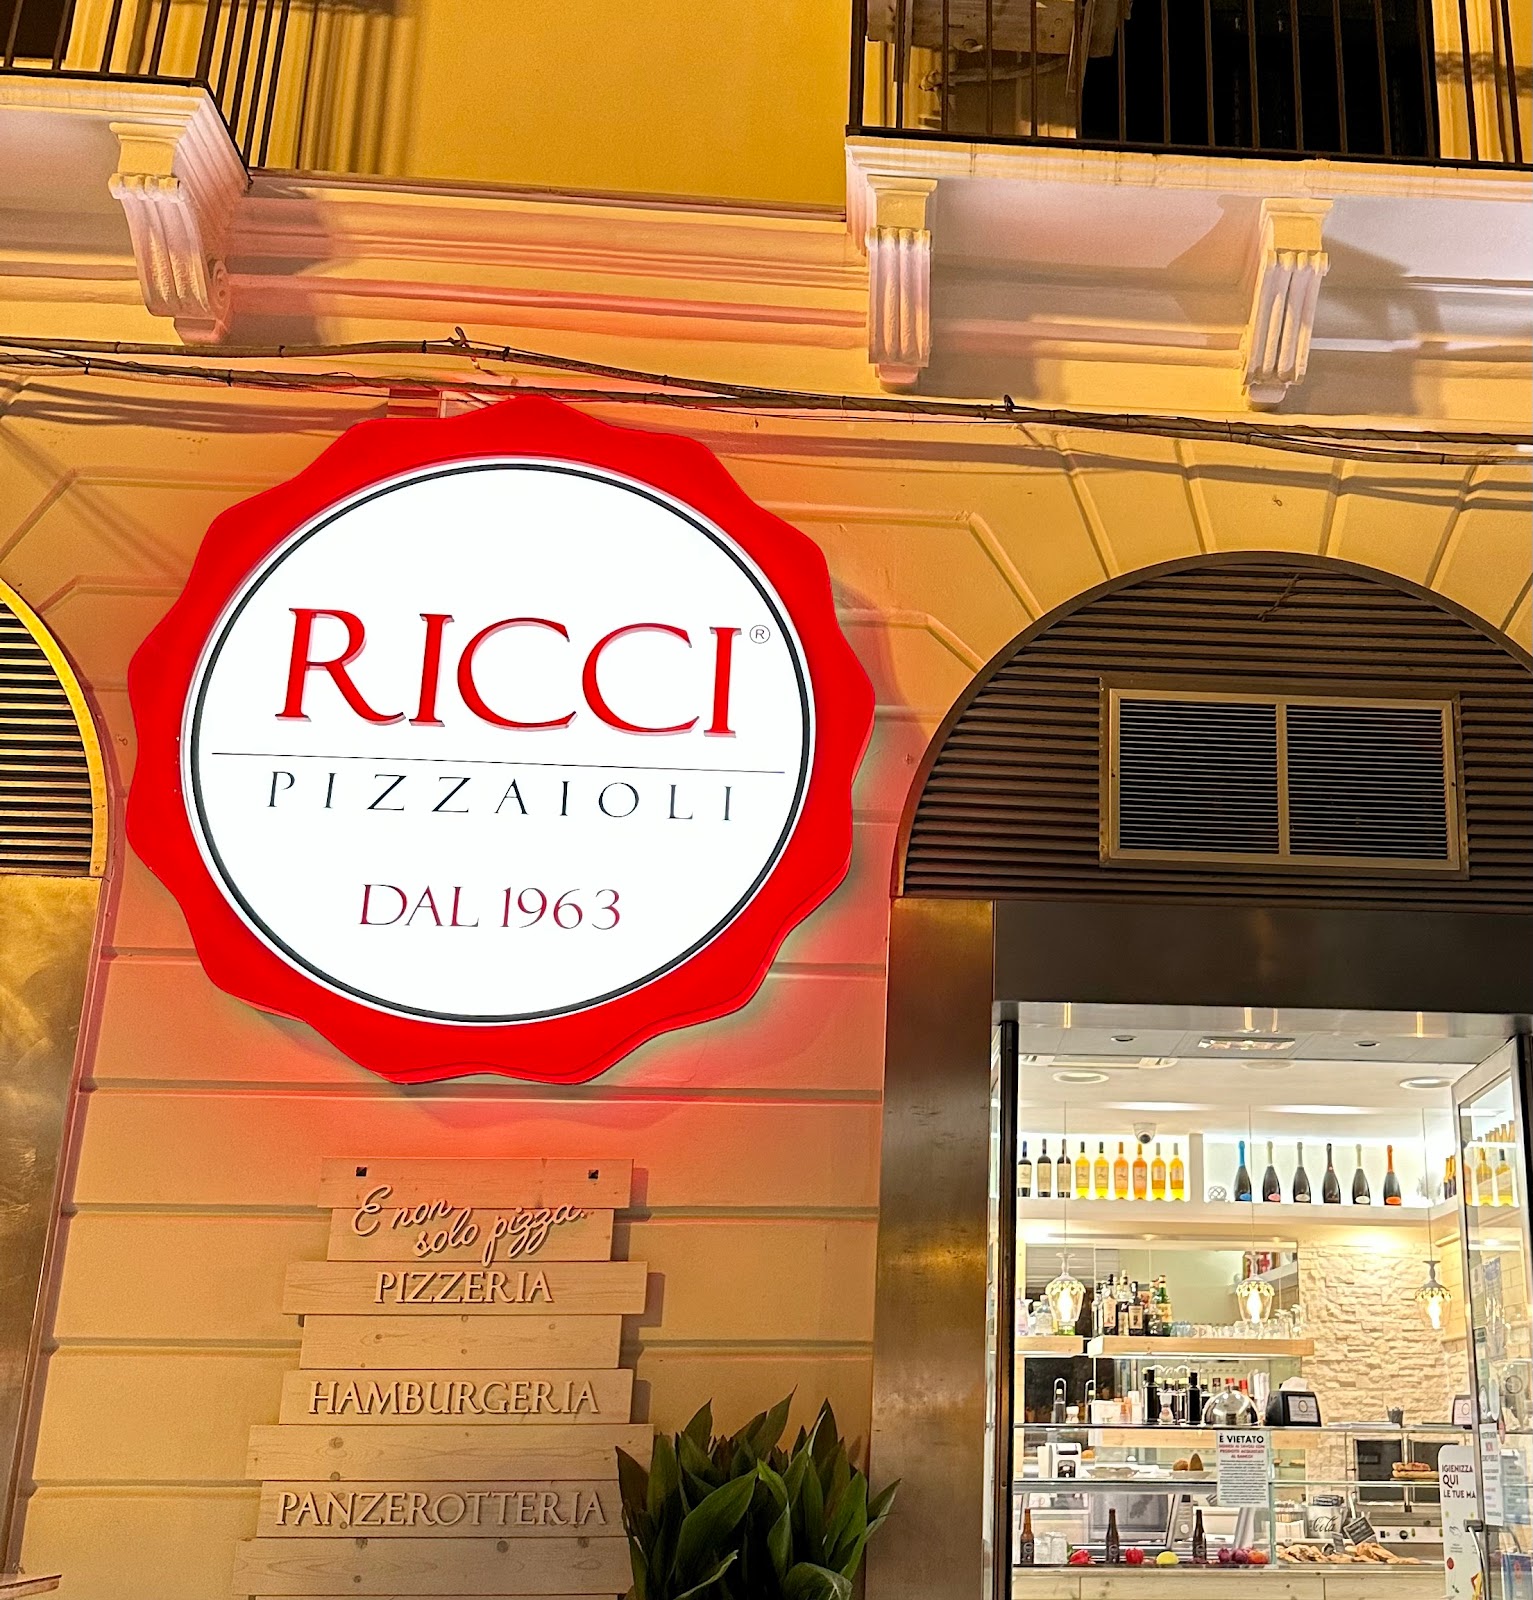 Ricci - Pizzaioli dal 1963